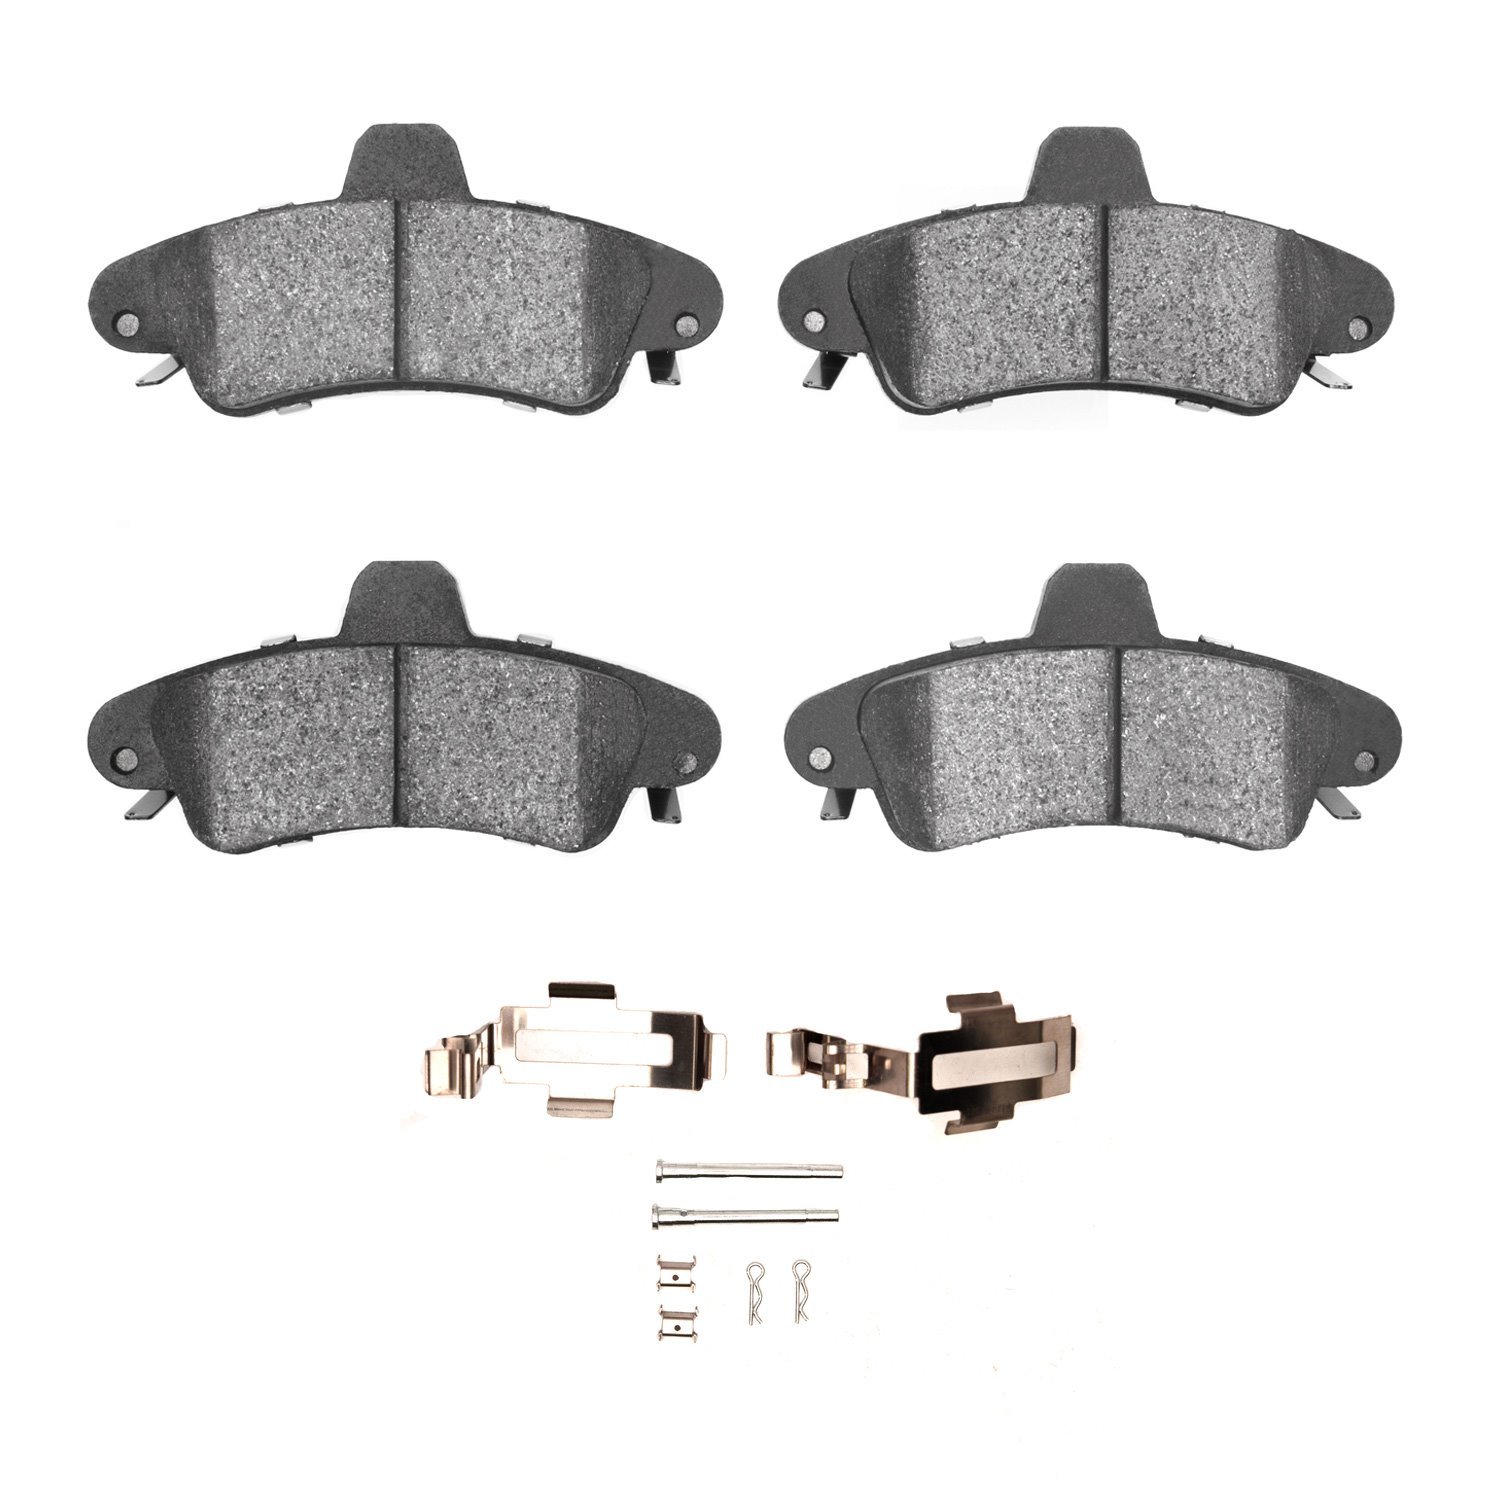 1551-0899-11 5000 Advanced Semi-Metallic Brake Pads & Hardware Kit, 1995-2002 Ford/Lincoln/Mercury/Mazda, Position: Rear